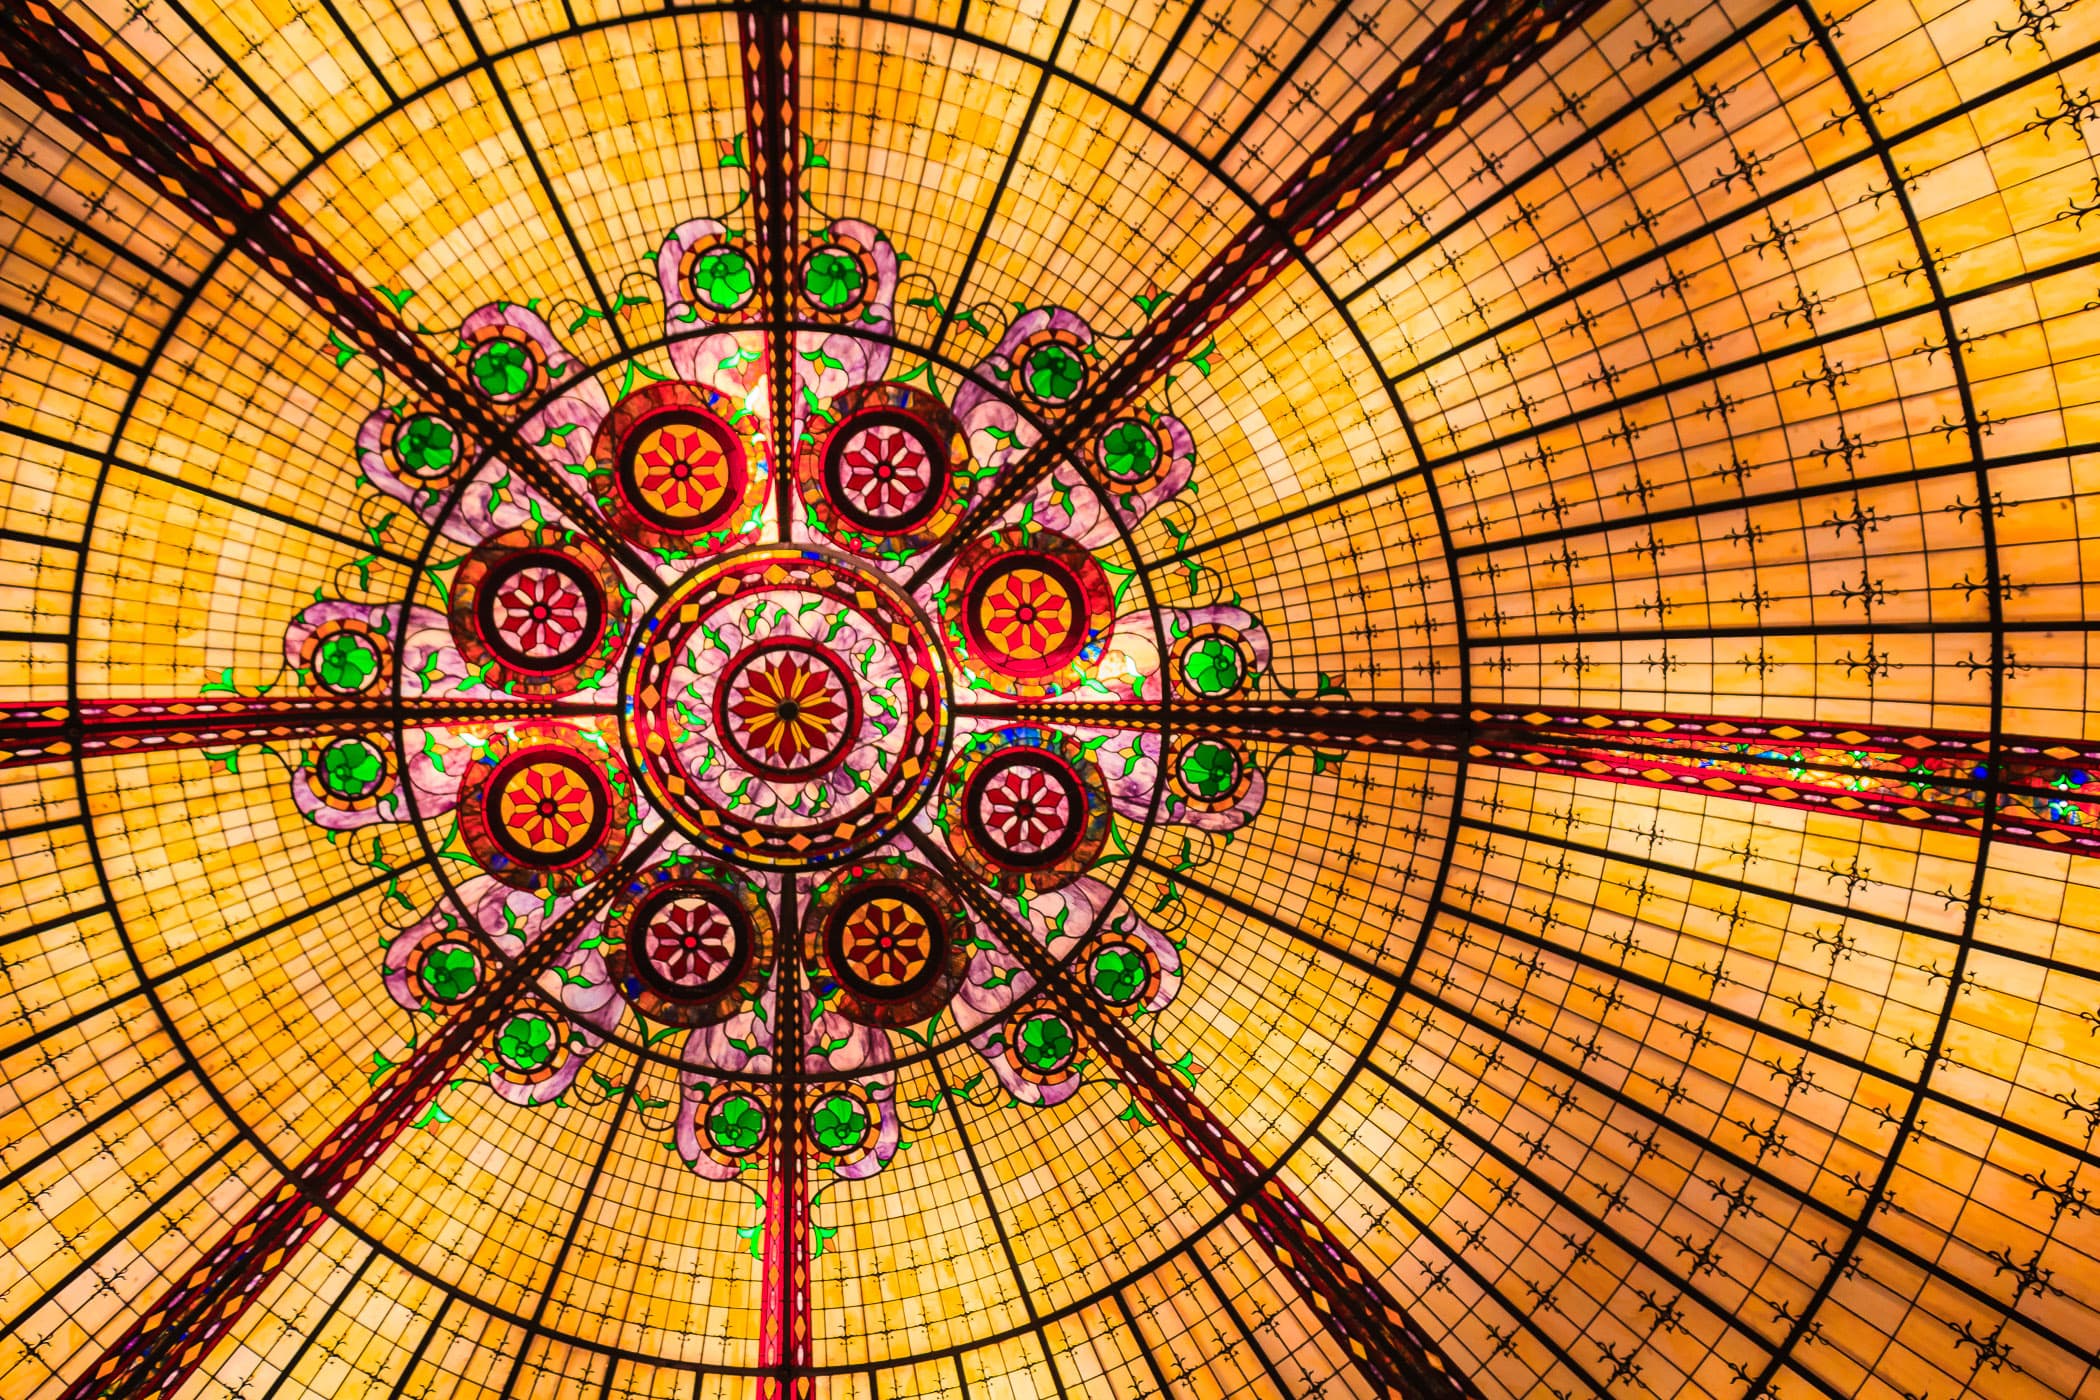 Detail of a glass "skylight" inside the Paris Hotel & Casino, Las Vegas.